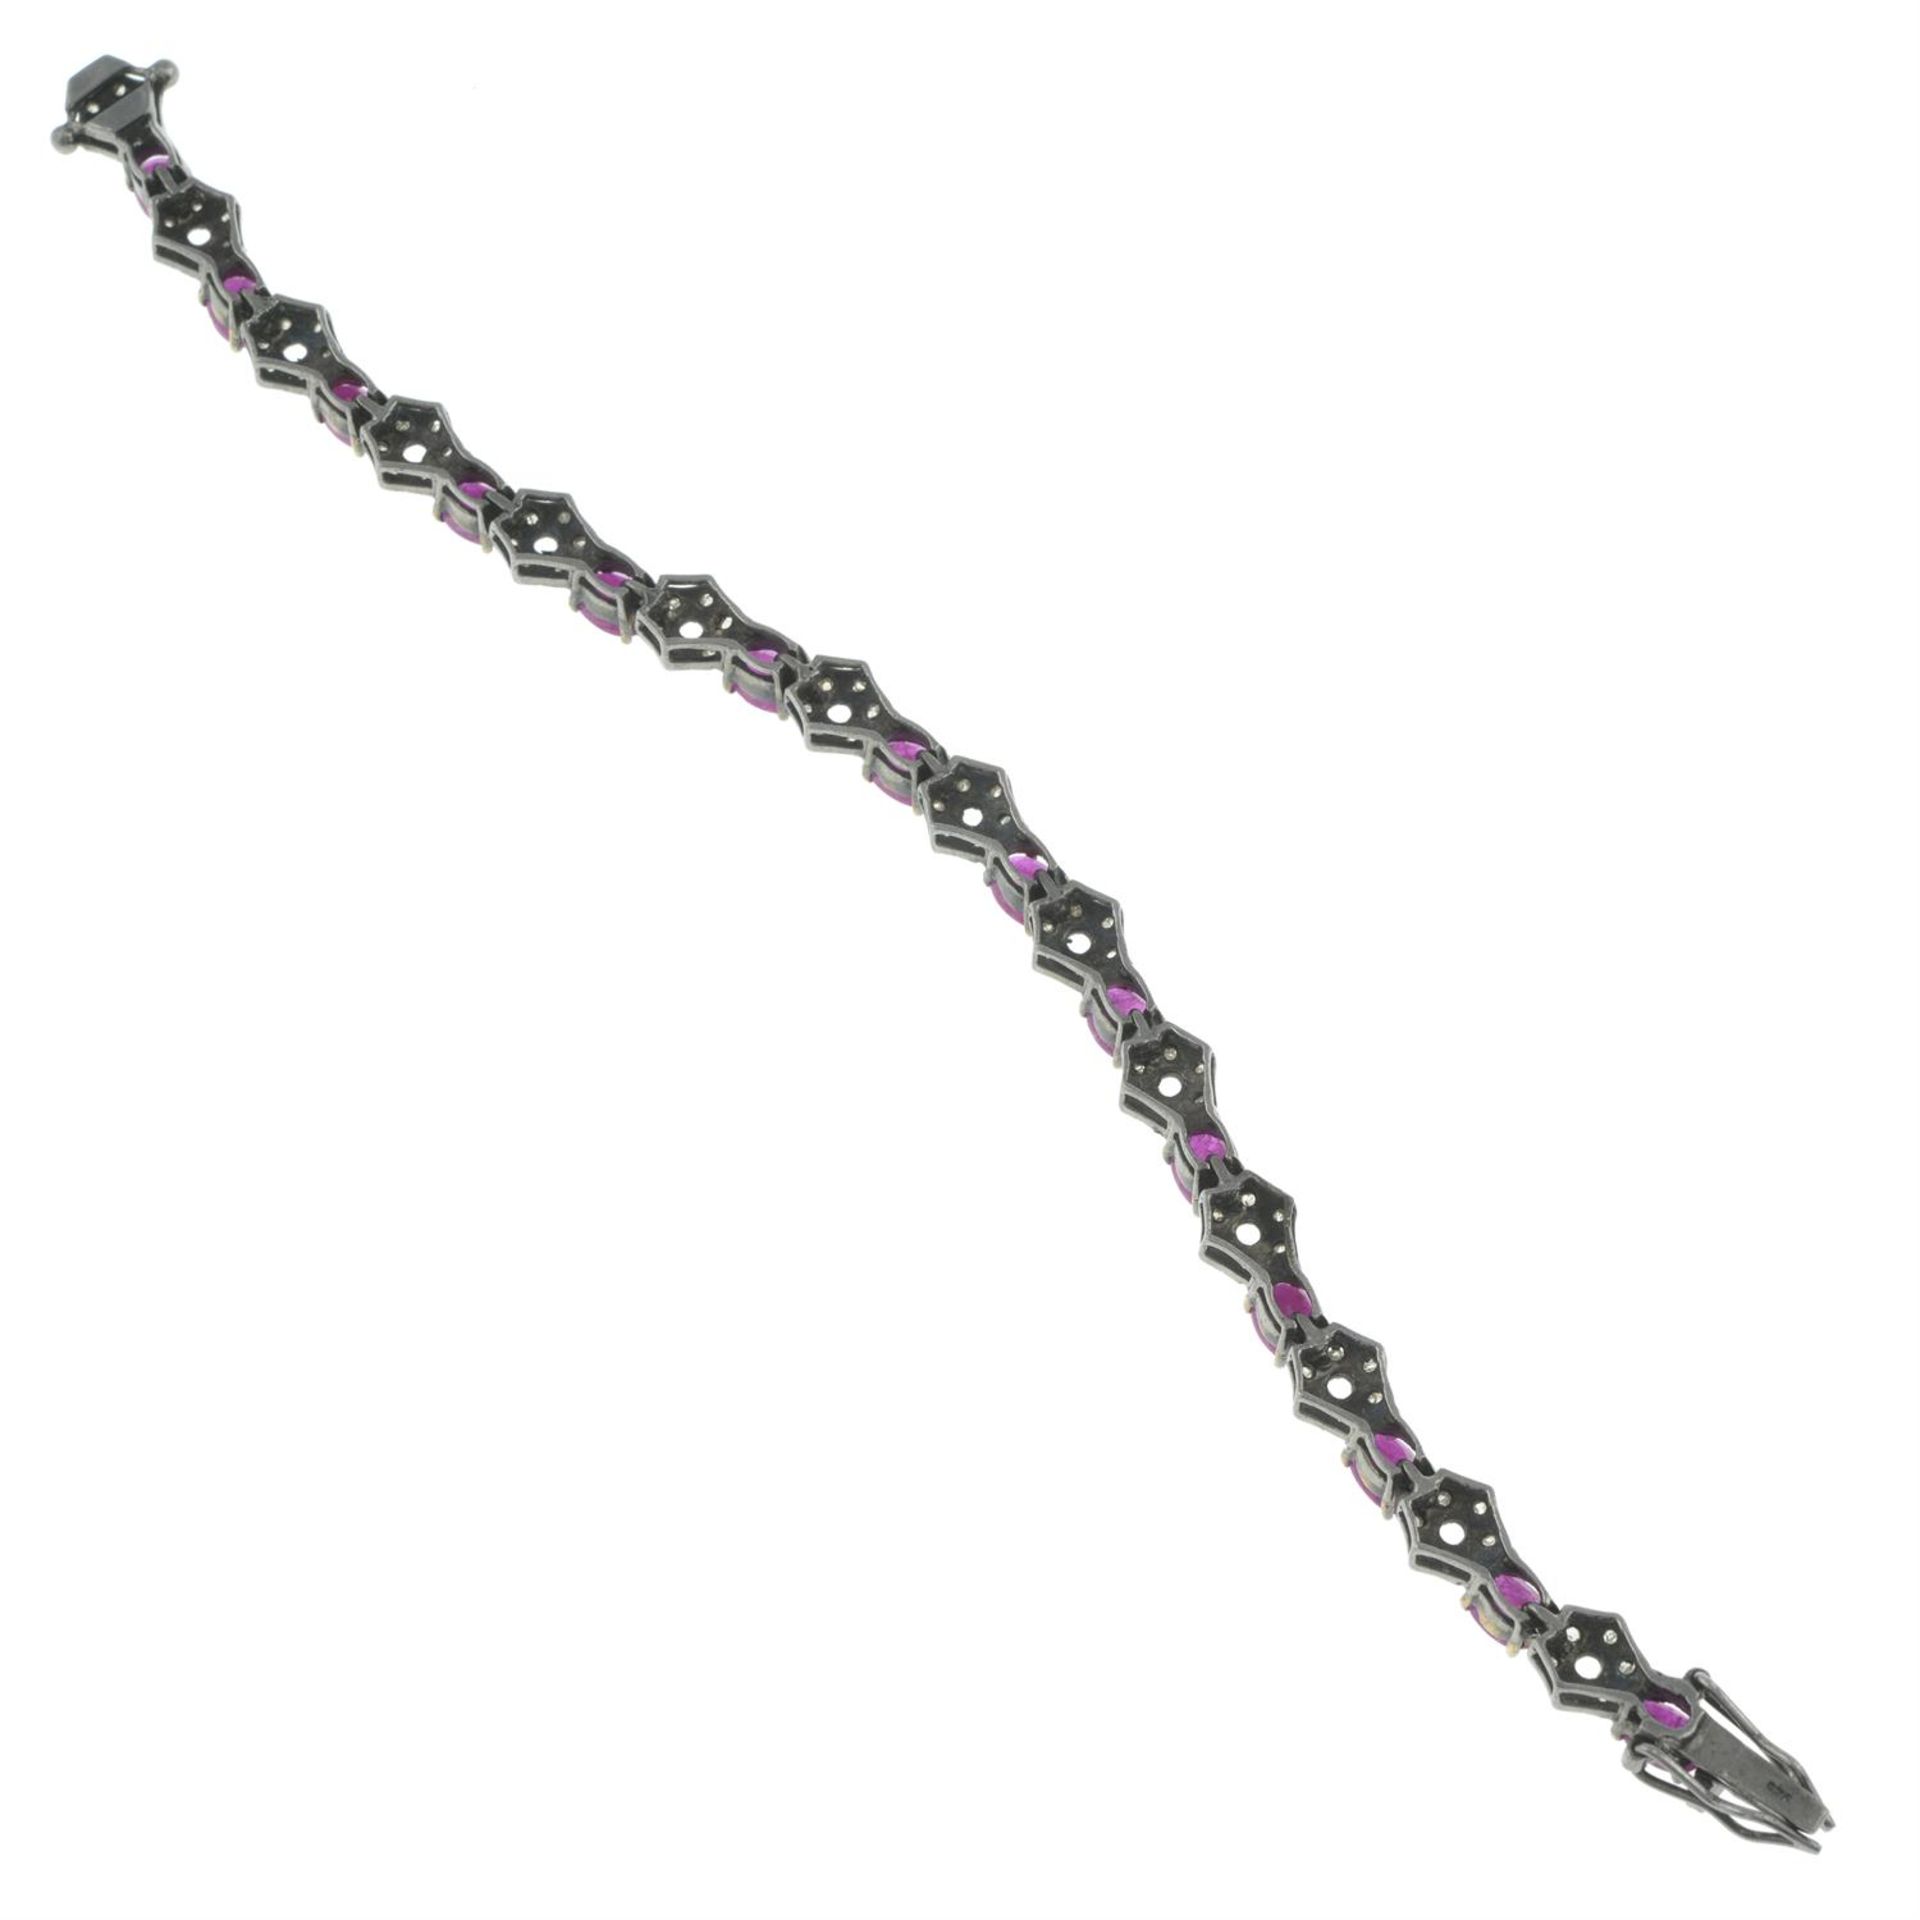 Ruby & diamond bracelet - Image 2 of 2